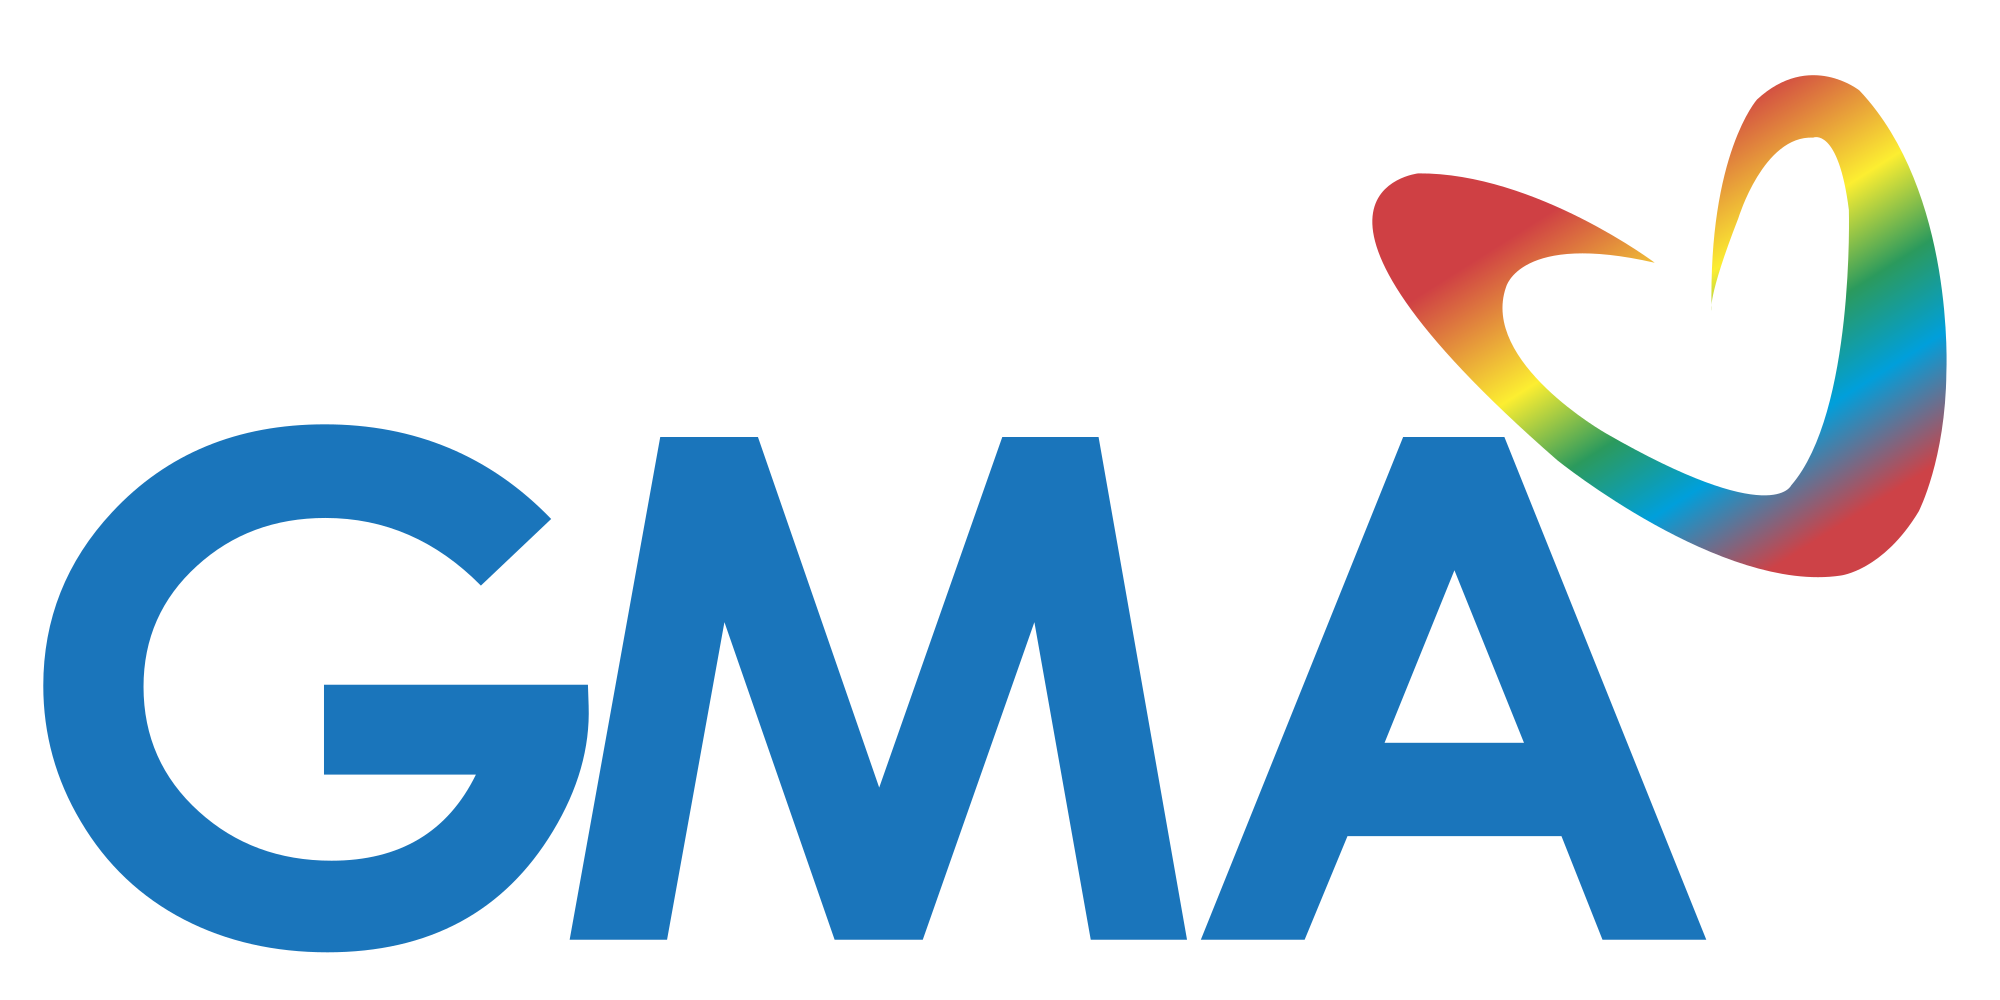 GMA Network - network